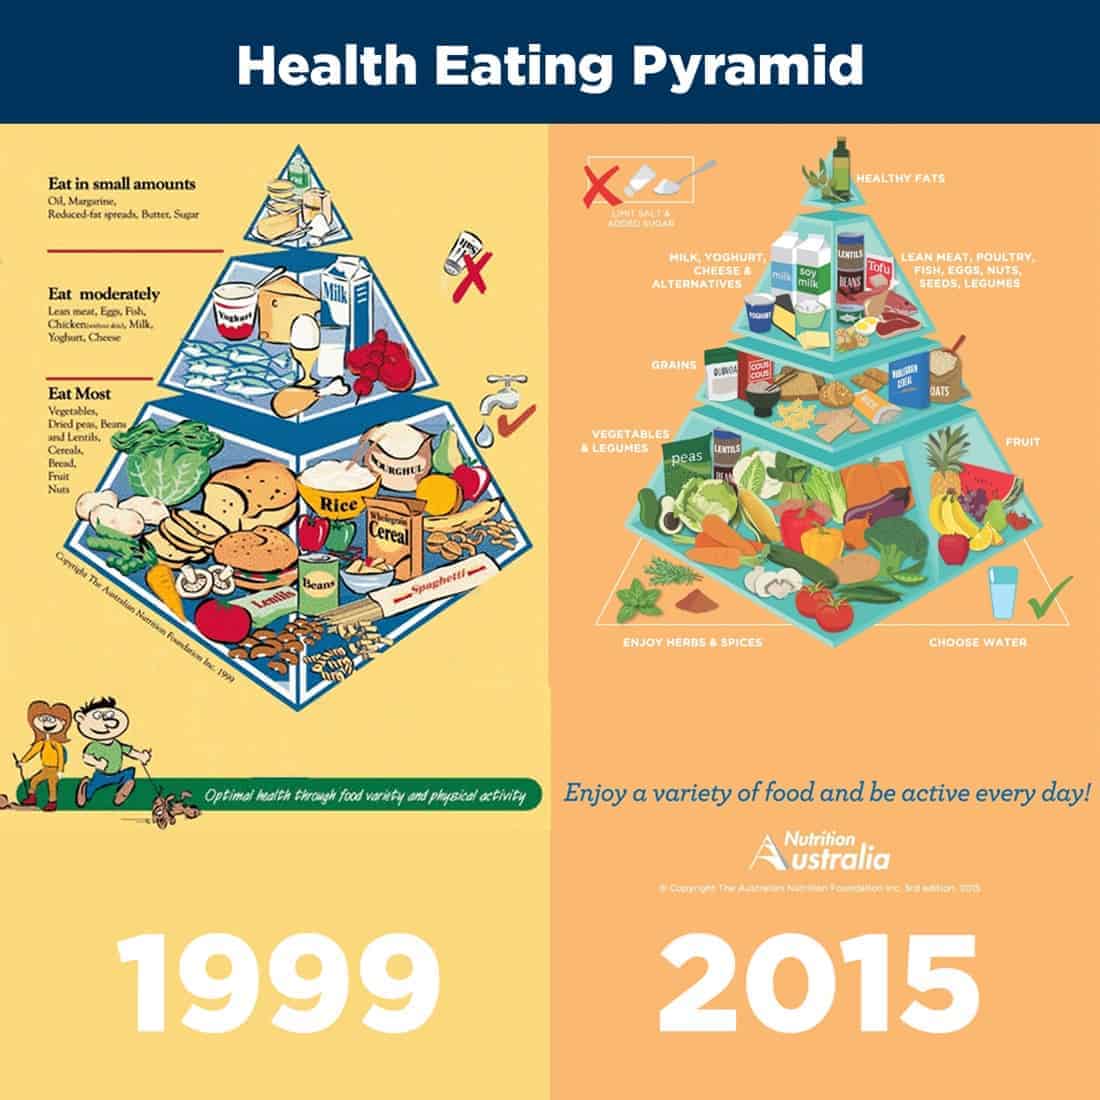 health-eating-pyramid_2015_to_1999